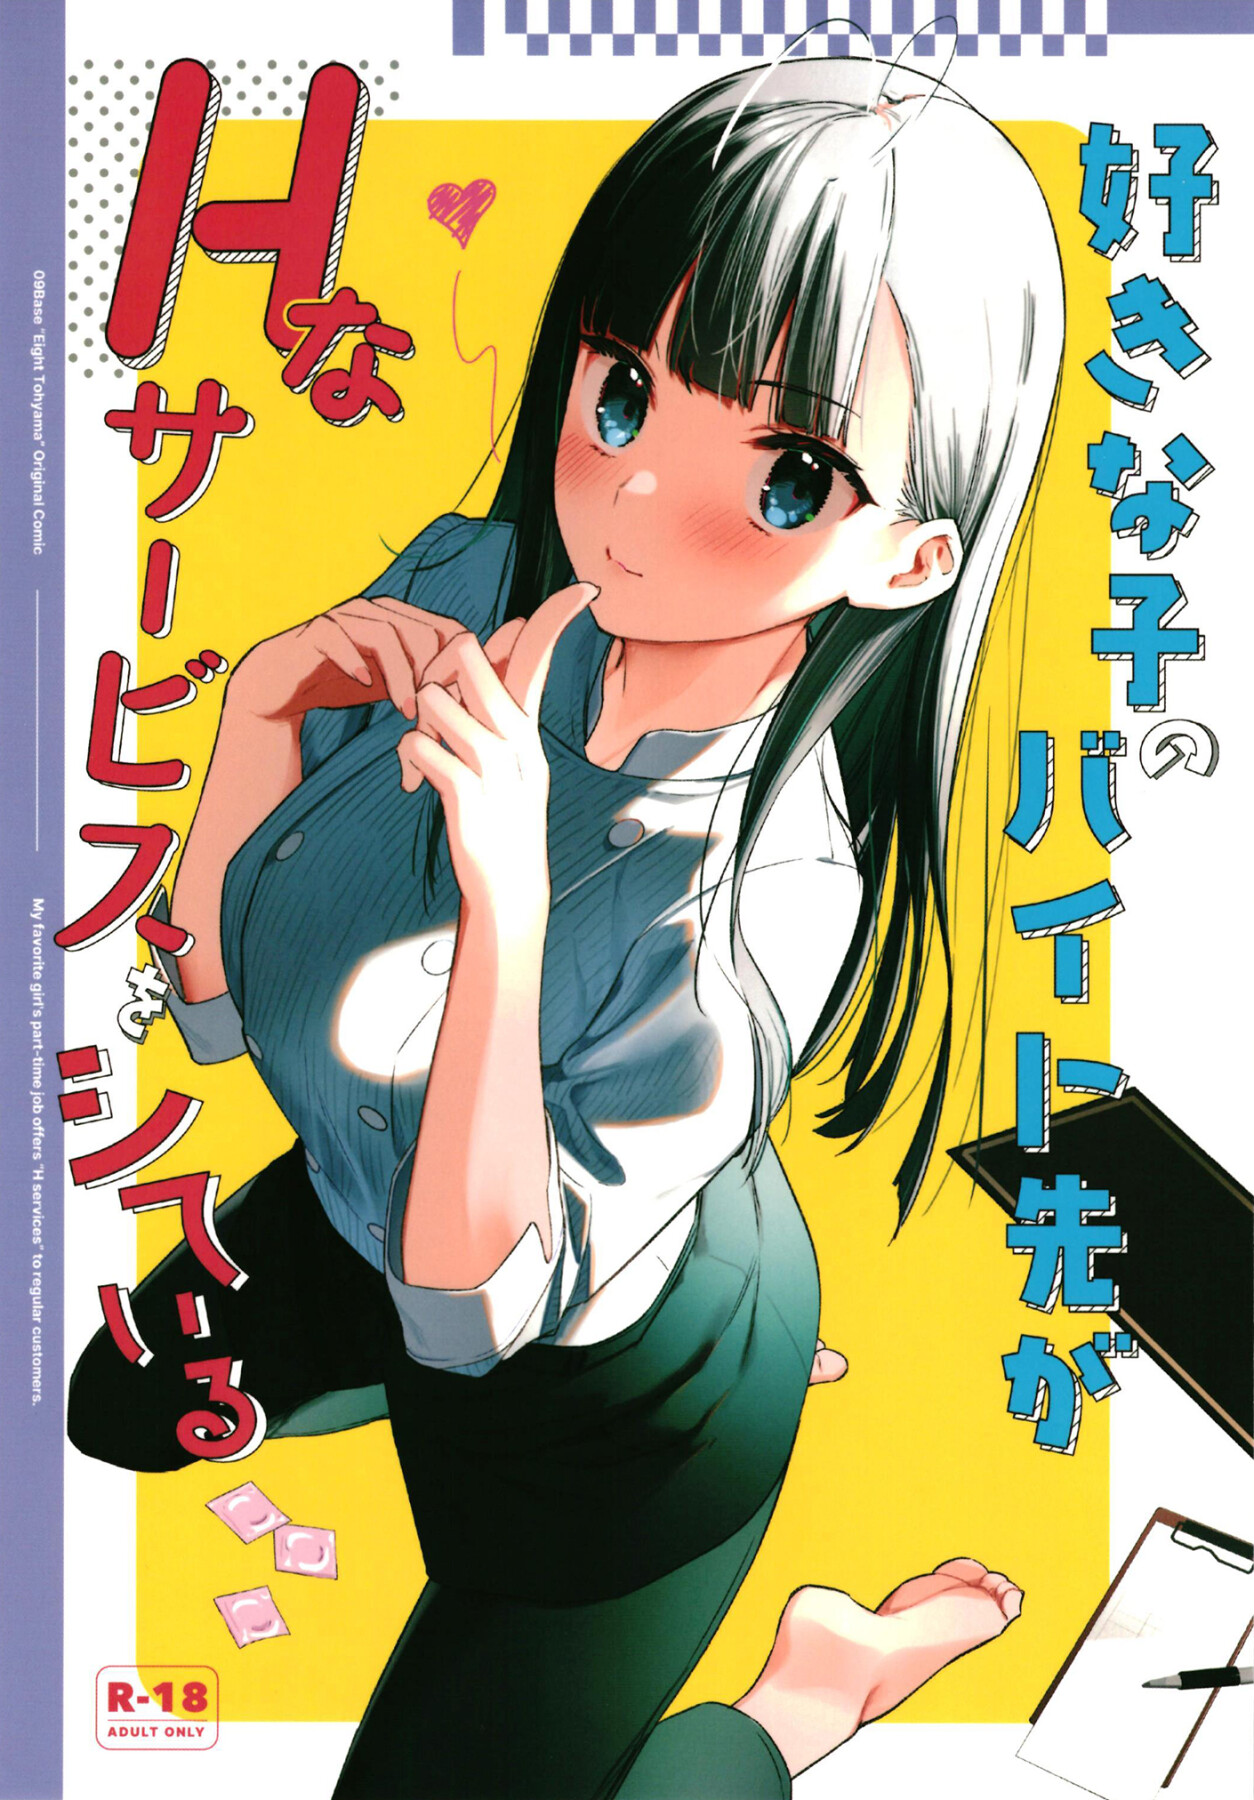 Hentai Manga Comic-My favorite girl's part-time job offers -Read-1